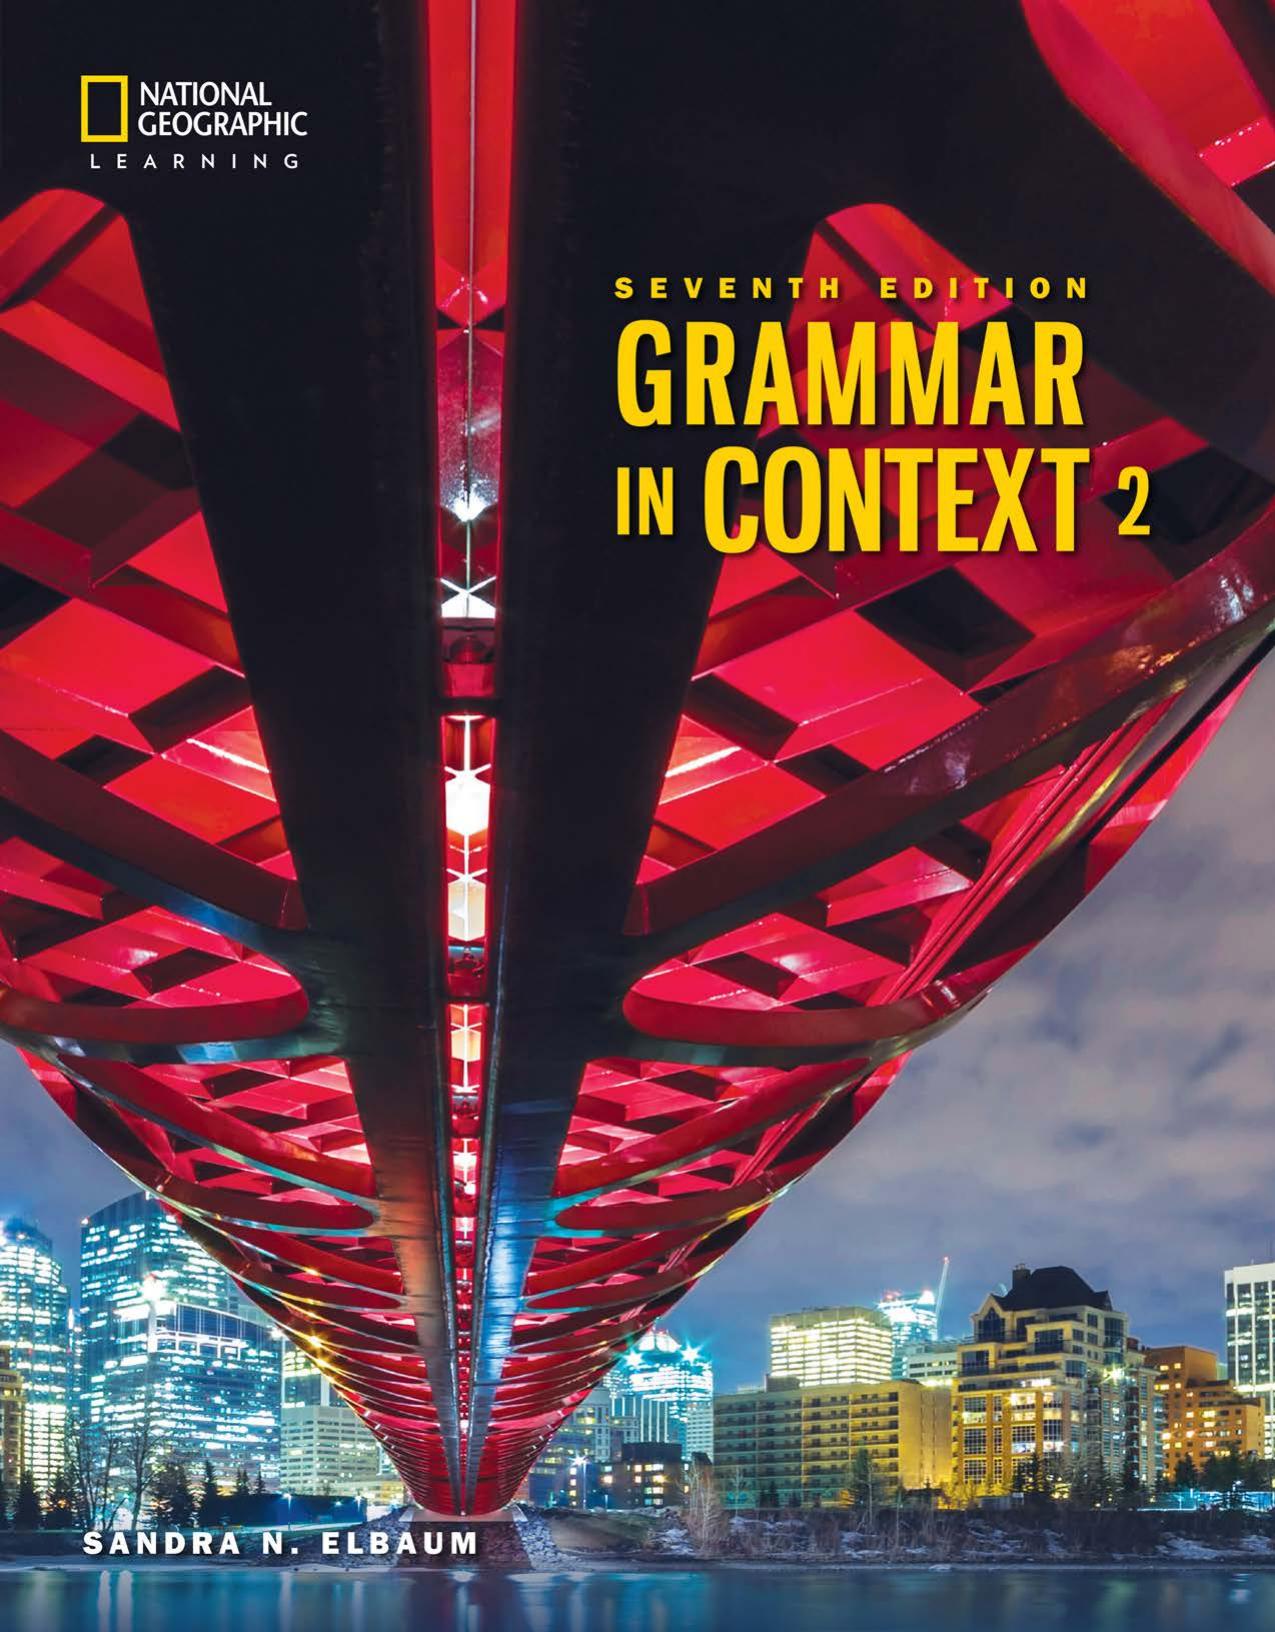 Grammar In Context 2(Grammar in Context, Seventh Edition) 007 Edition, by Sandra N. Elbaum